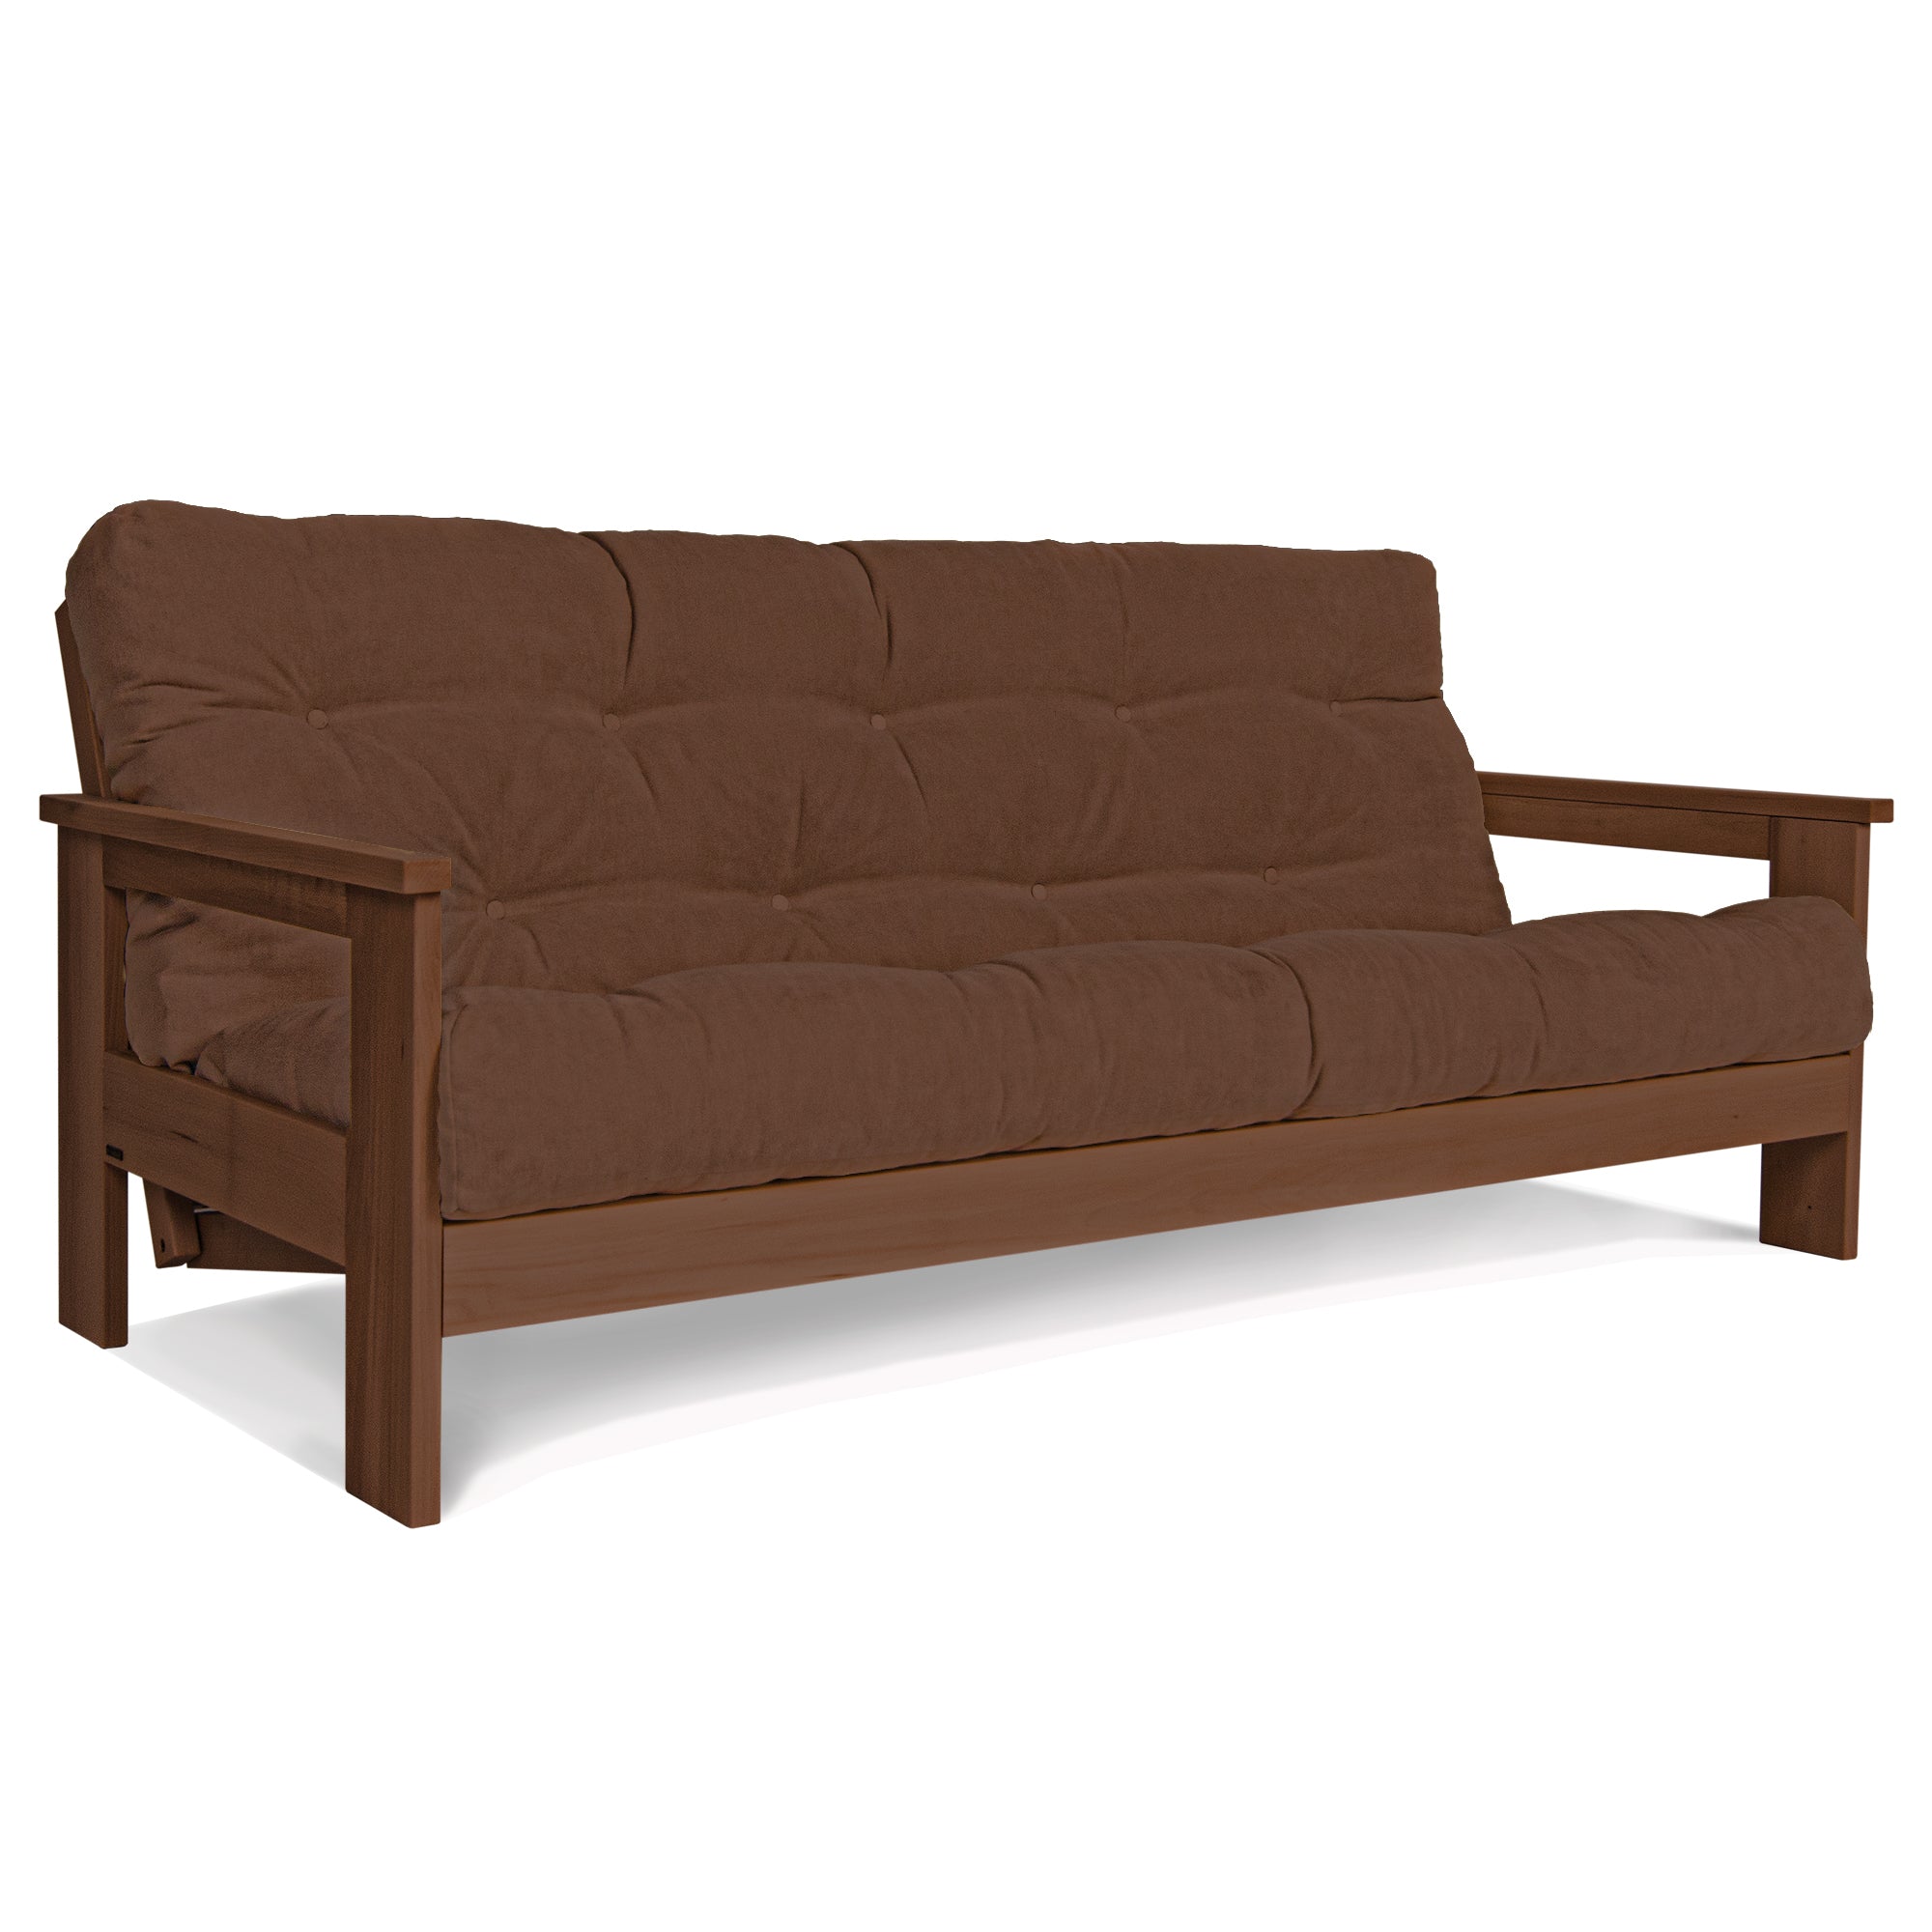 MEXICO Folding Sofa Bed-Beech Wood Frame-Walnut Colour-gray fabric colour-brown fabric colour